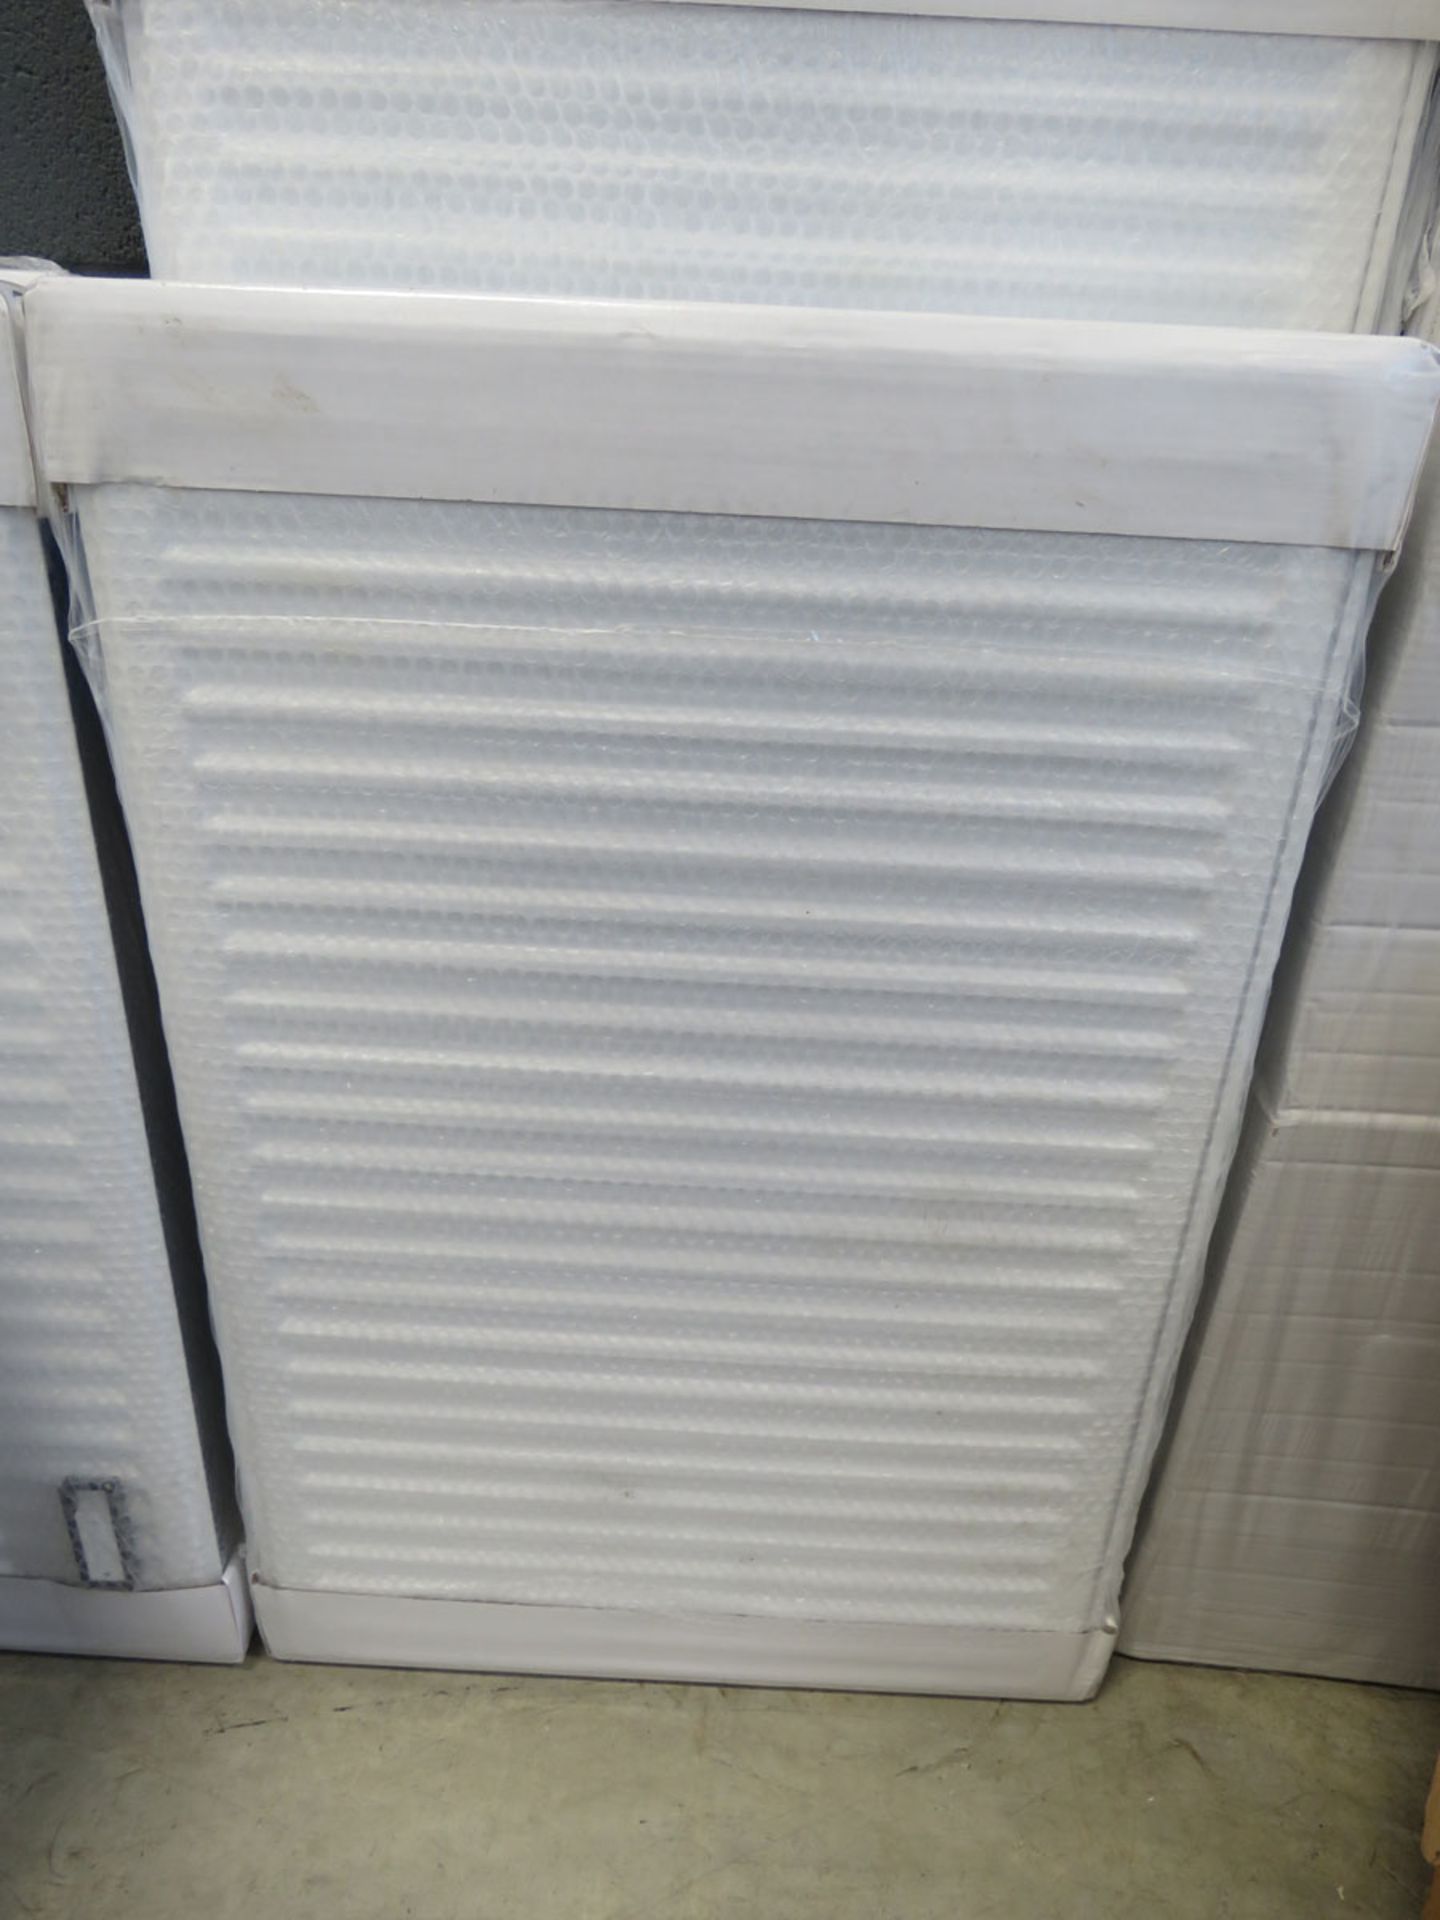 600mm x 900mm double panel radiator